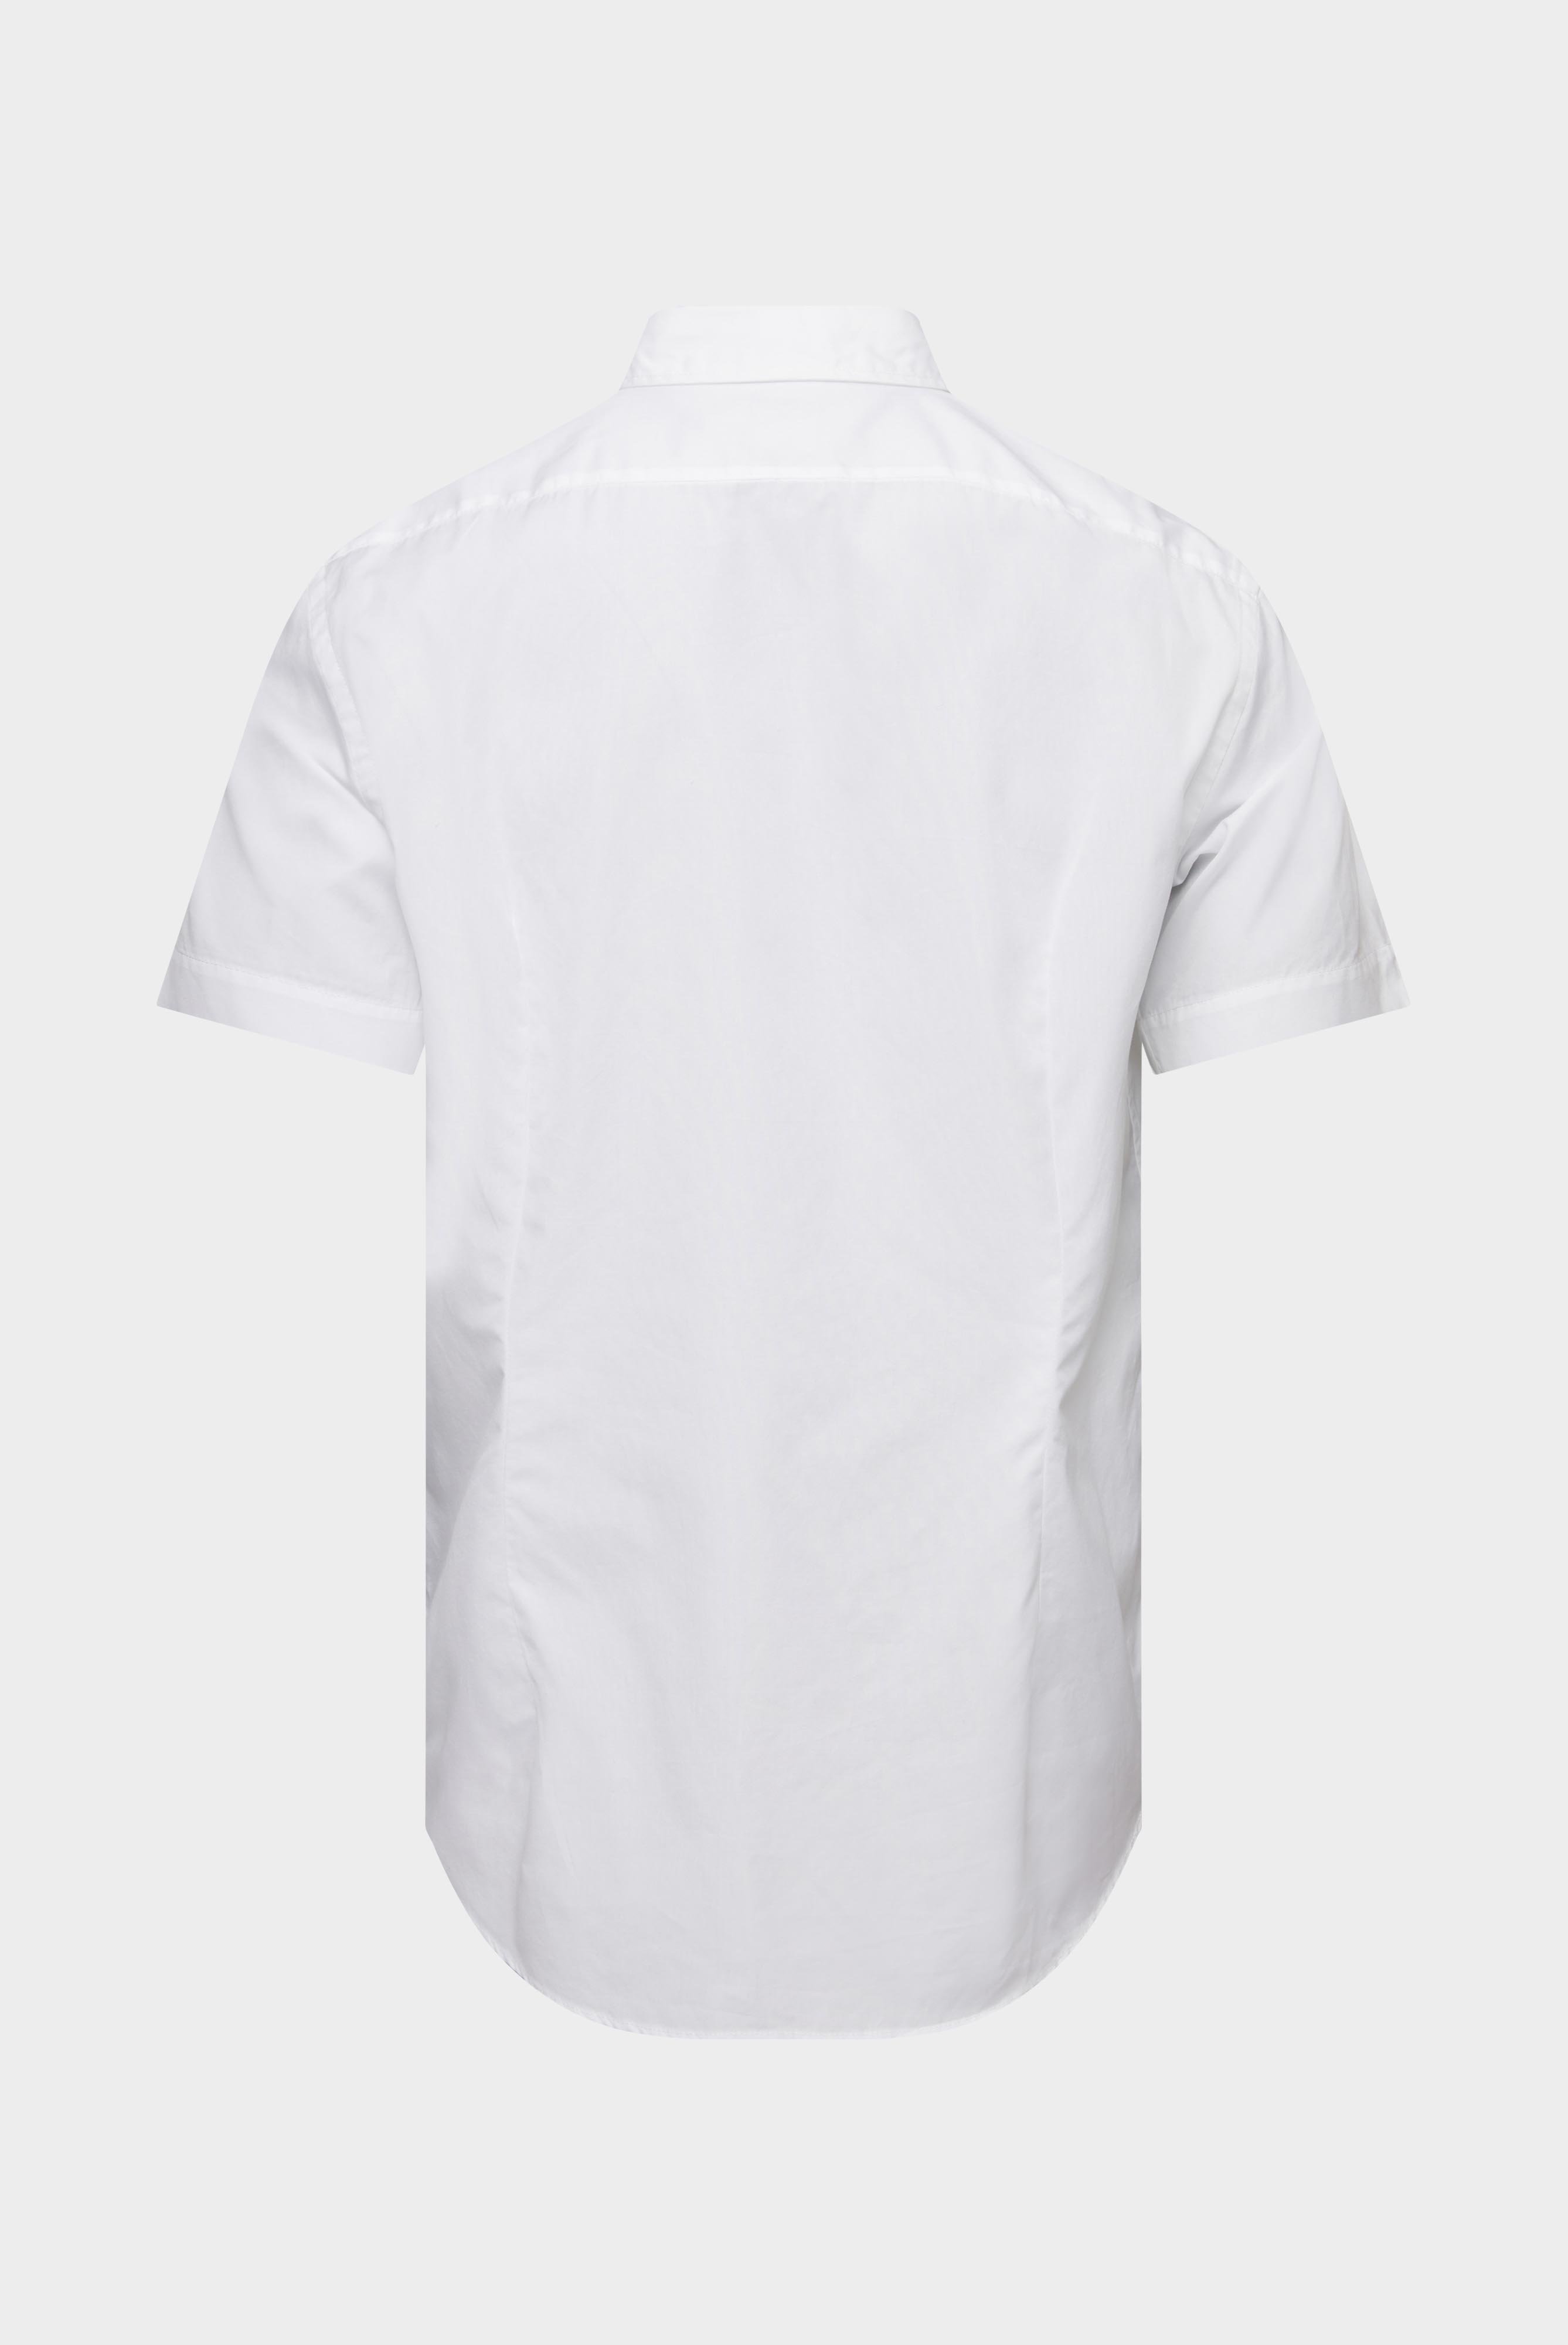 Kurzarm Hemden+Kurzärmliges Hemd aus Baumwollpopeline+20.2053.Q2.130648.000.41